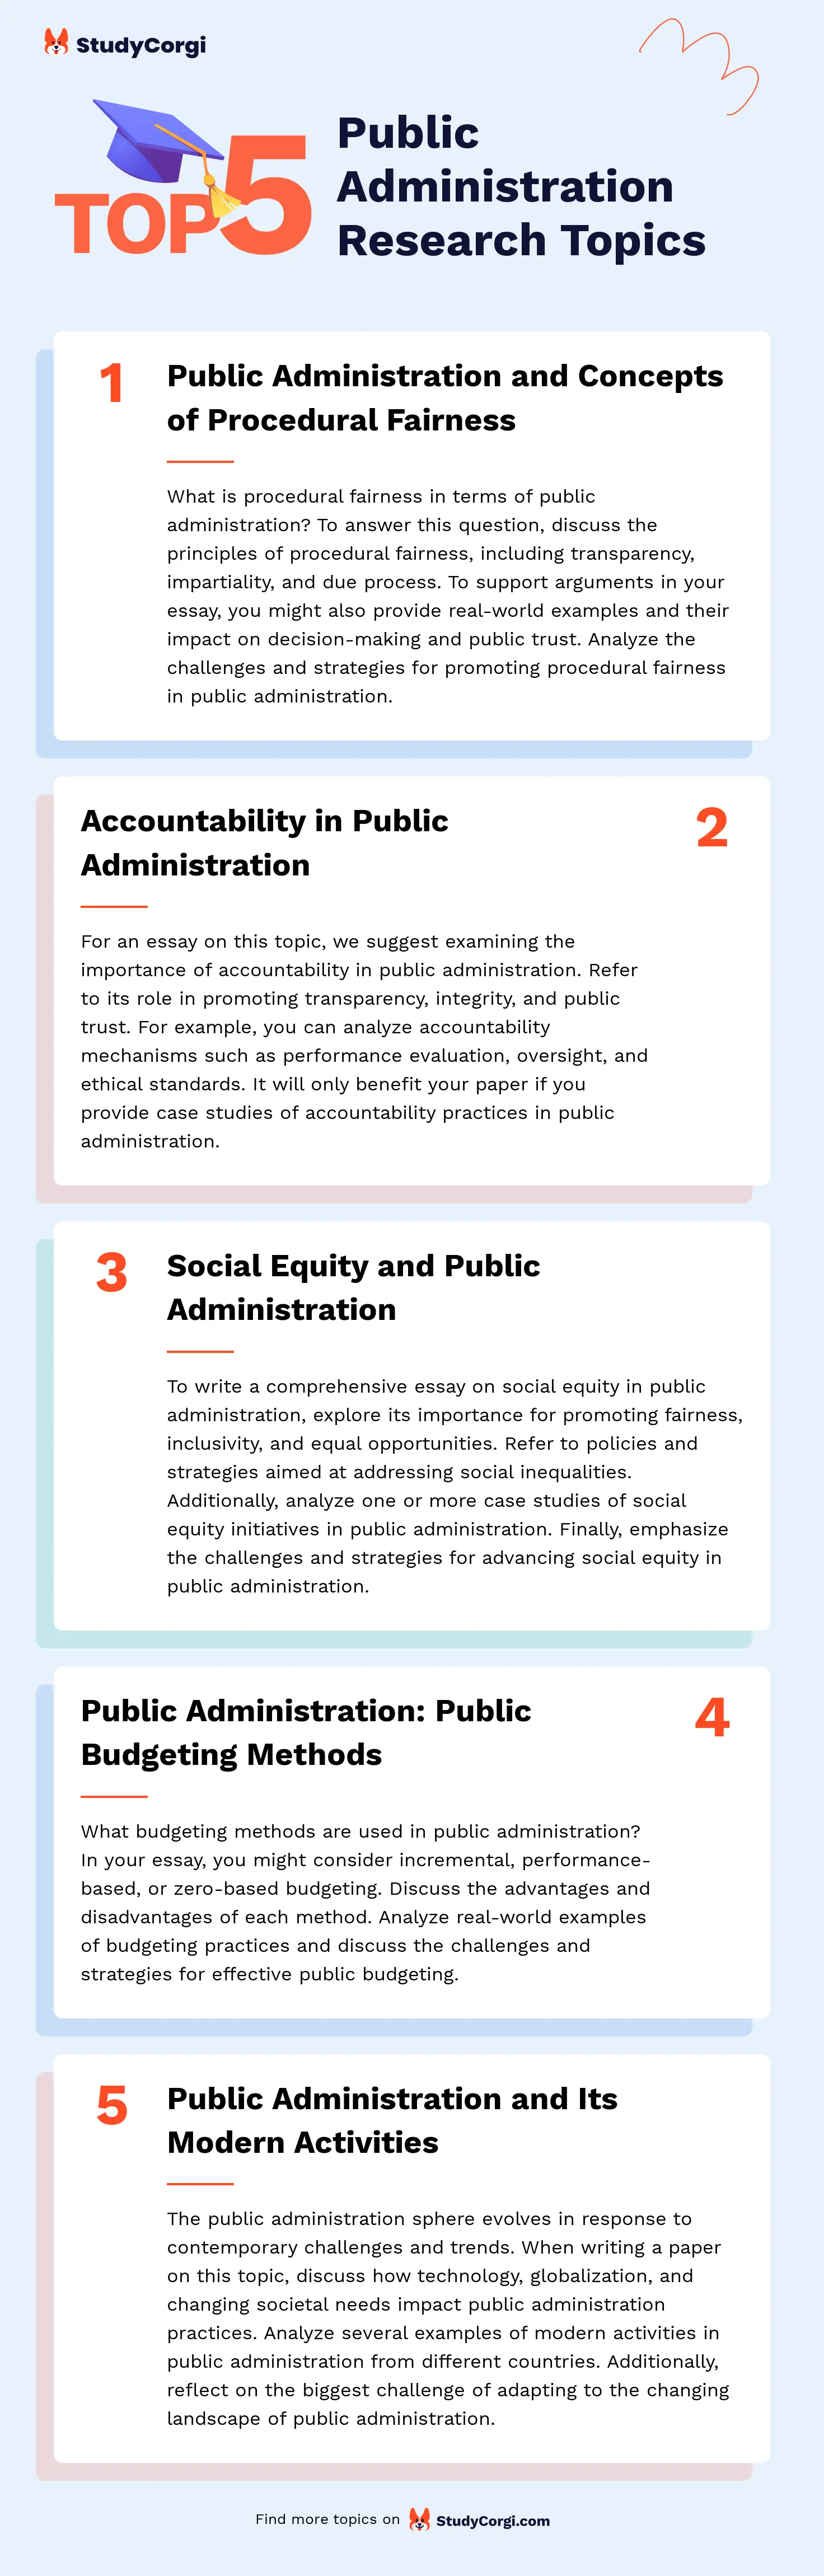 TOP-5 Public Administration Research Topics